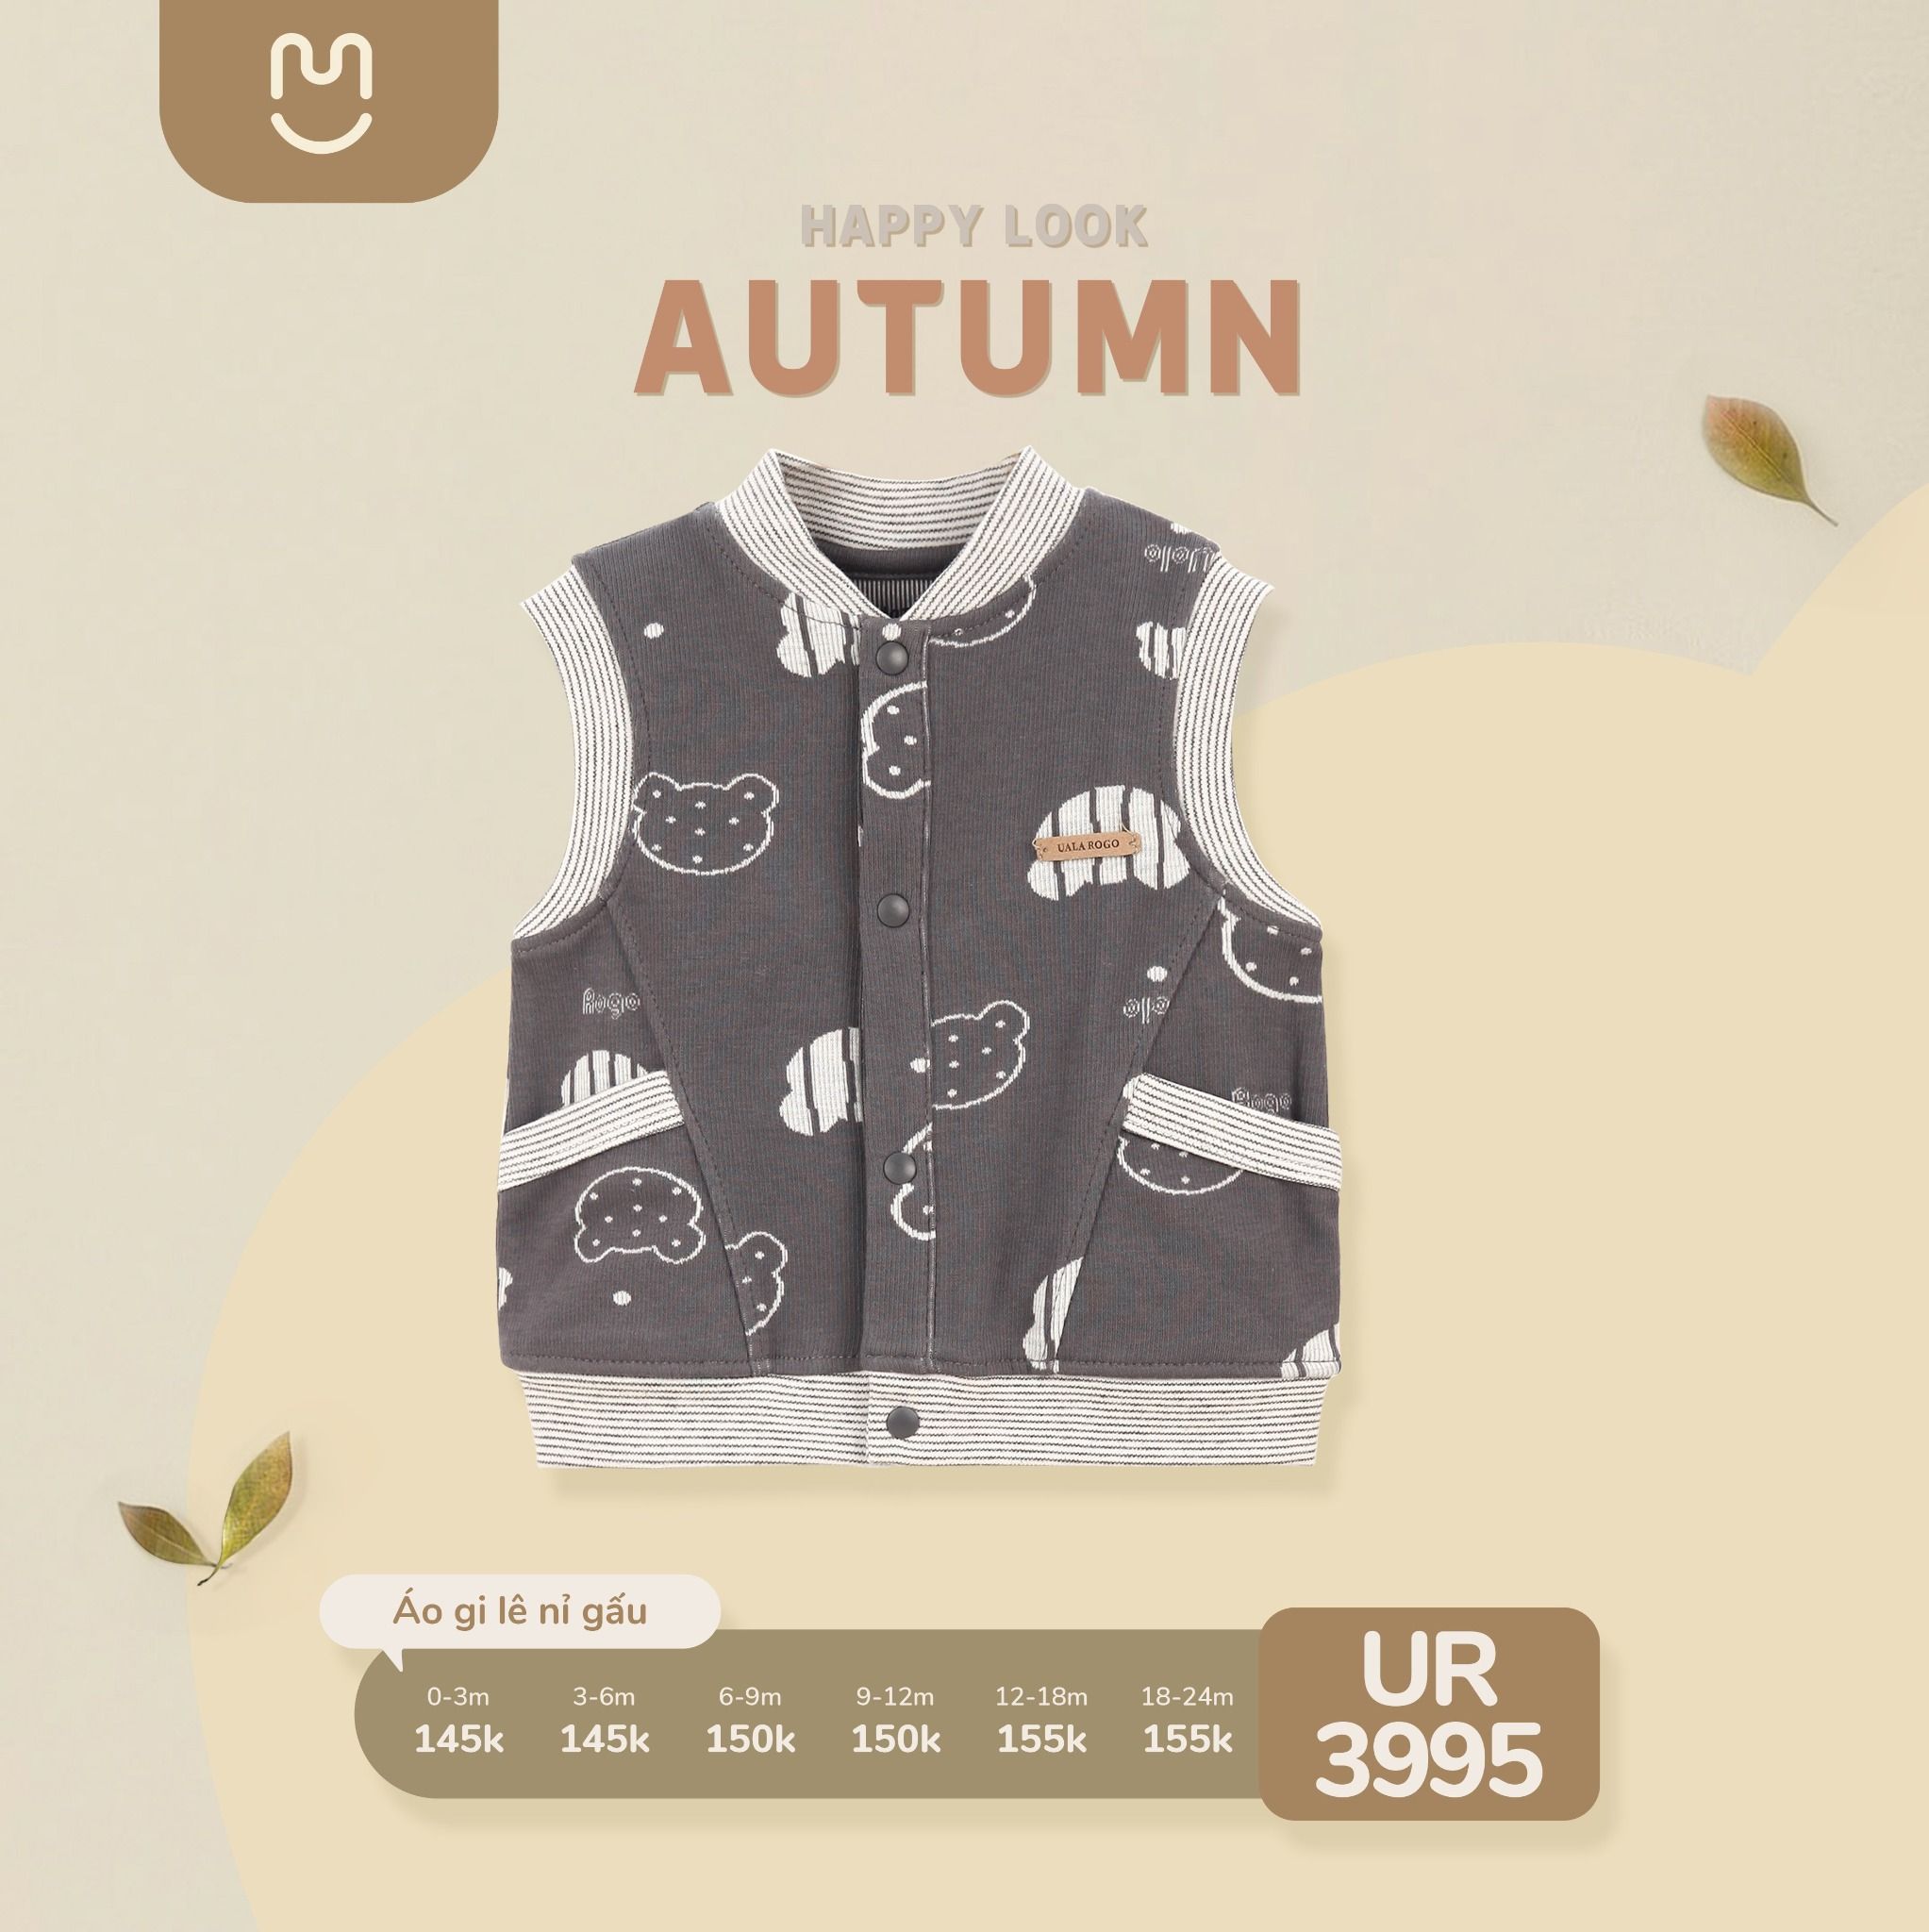  Áo gile cotton nỉ gấu UR 3995 